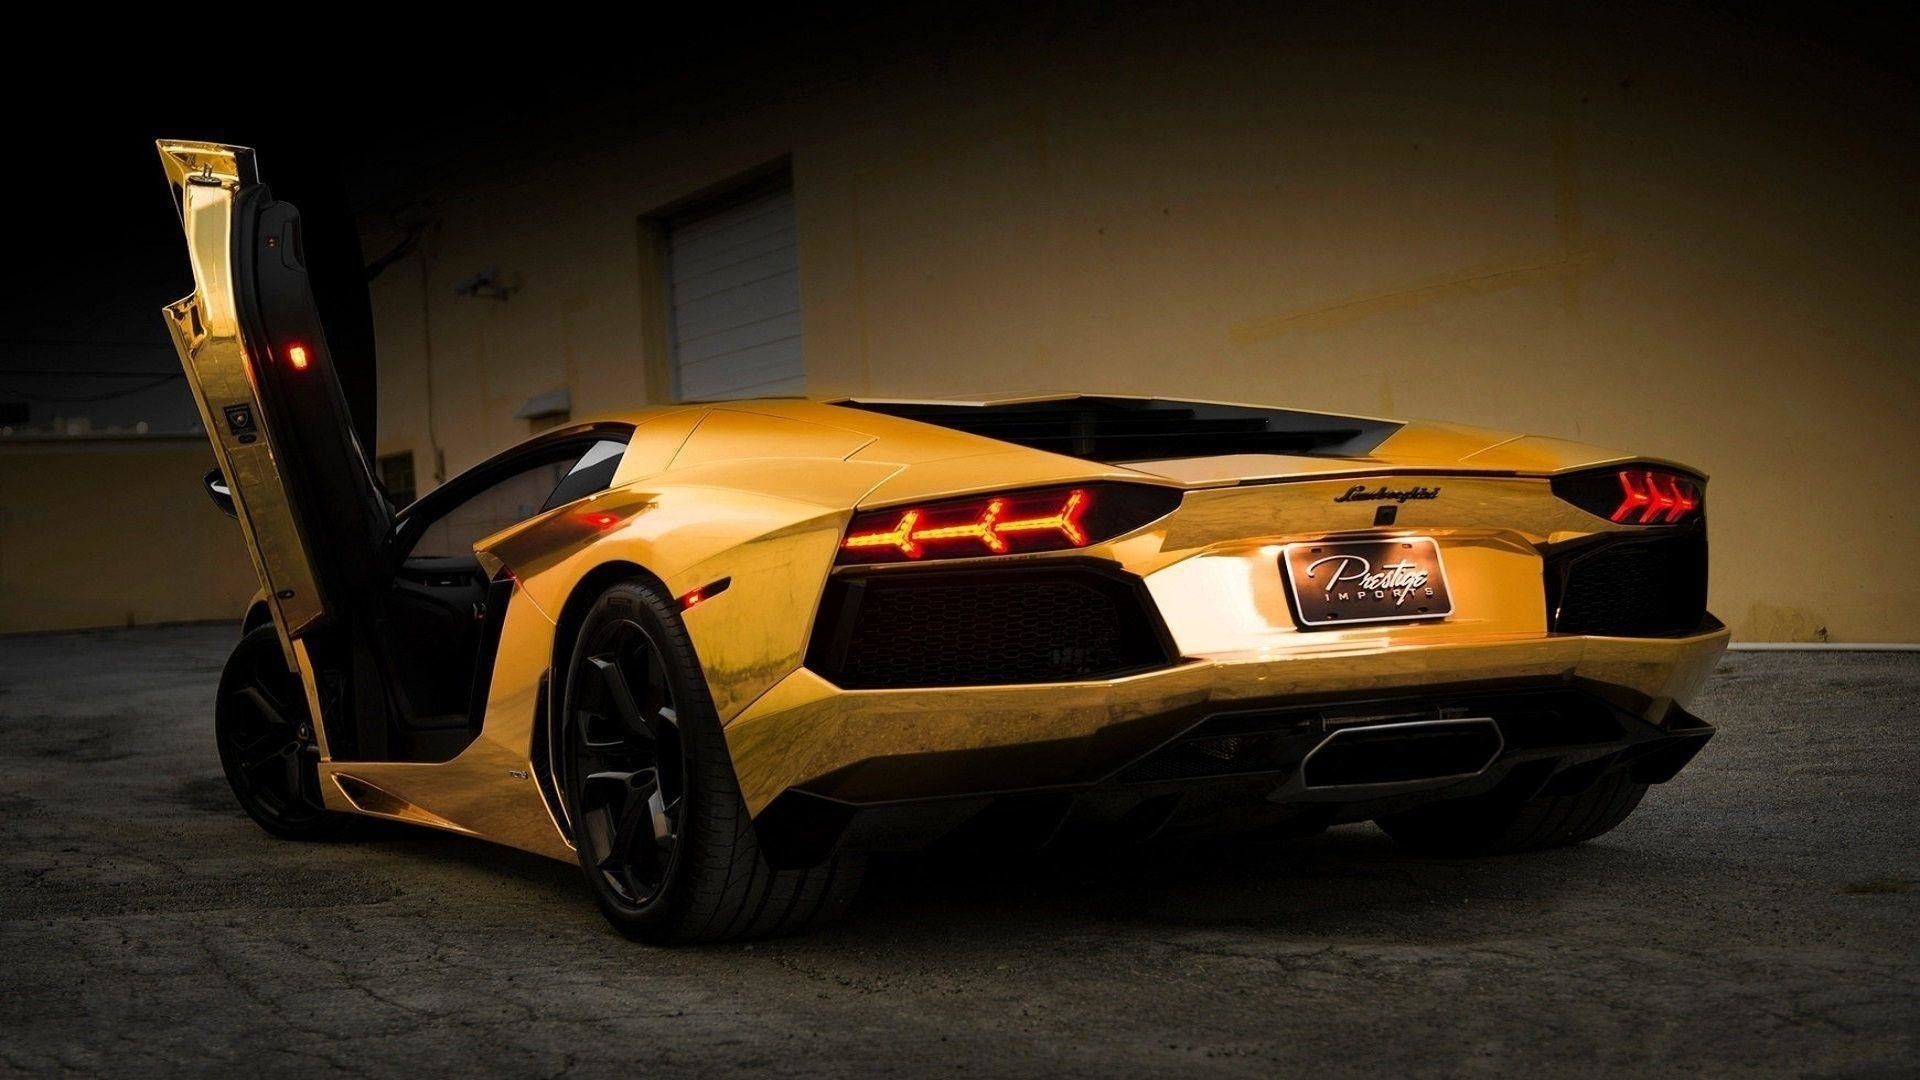 Gold Lamborghini Wallpaper and Background